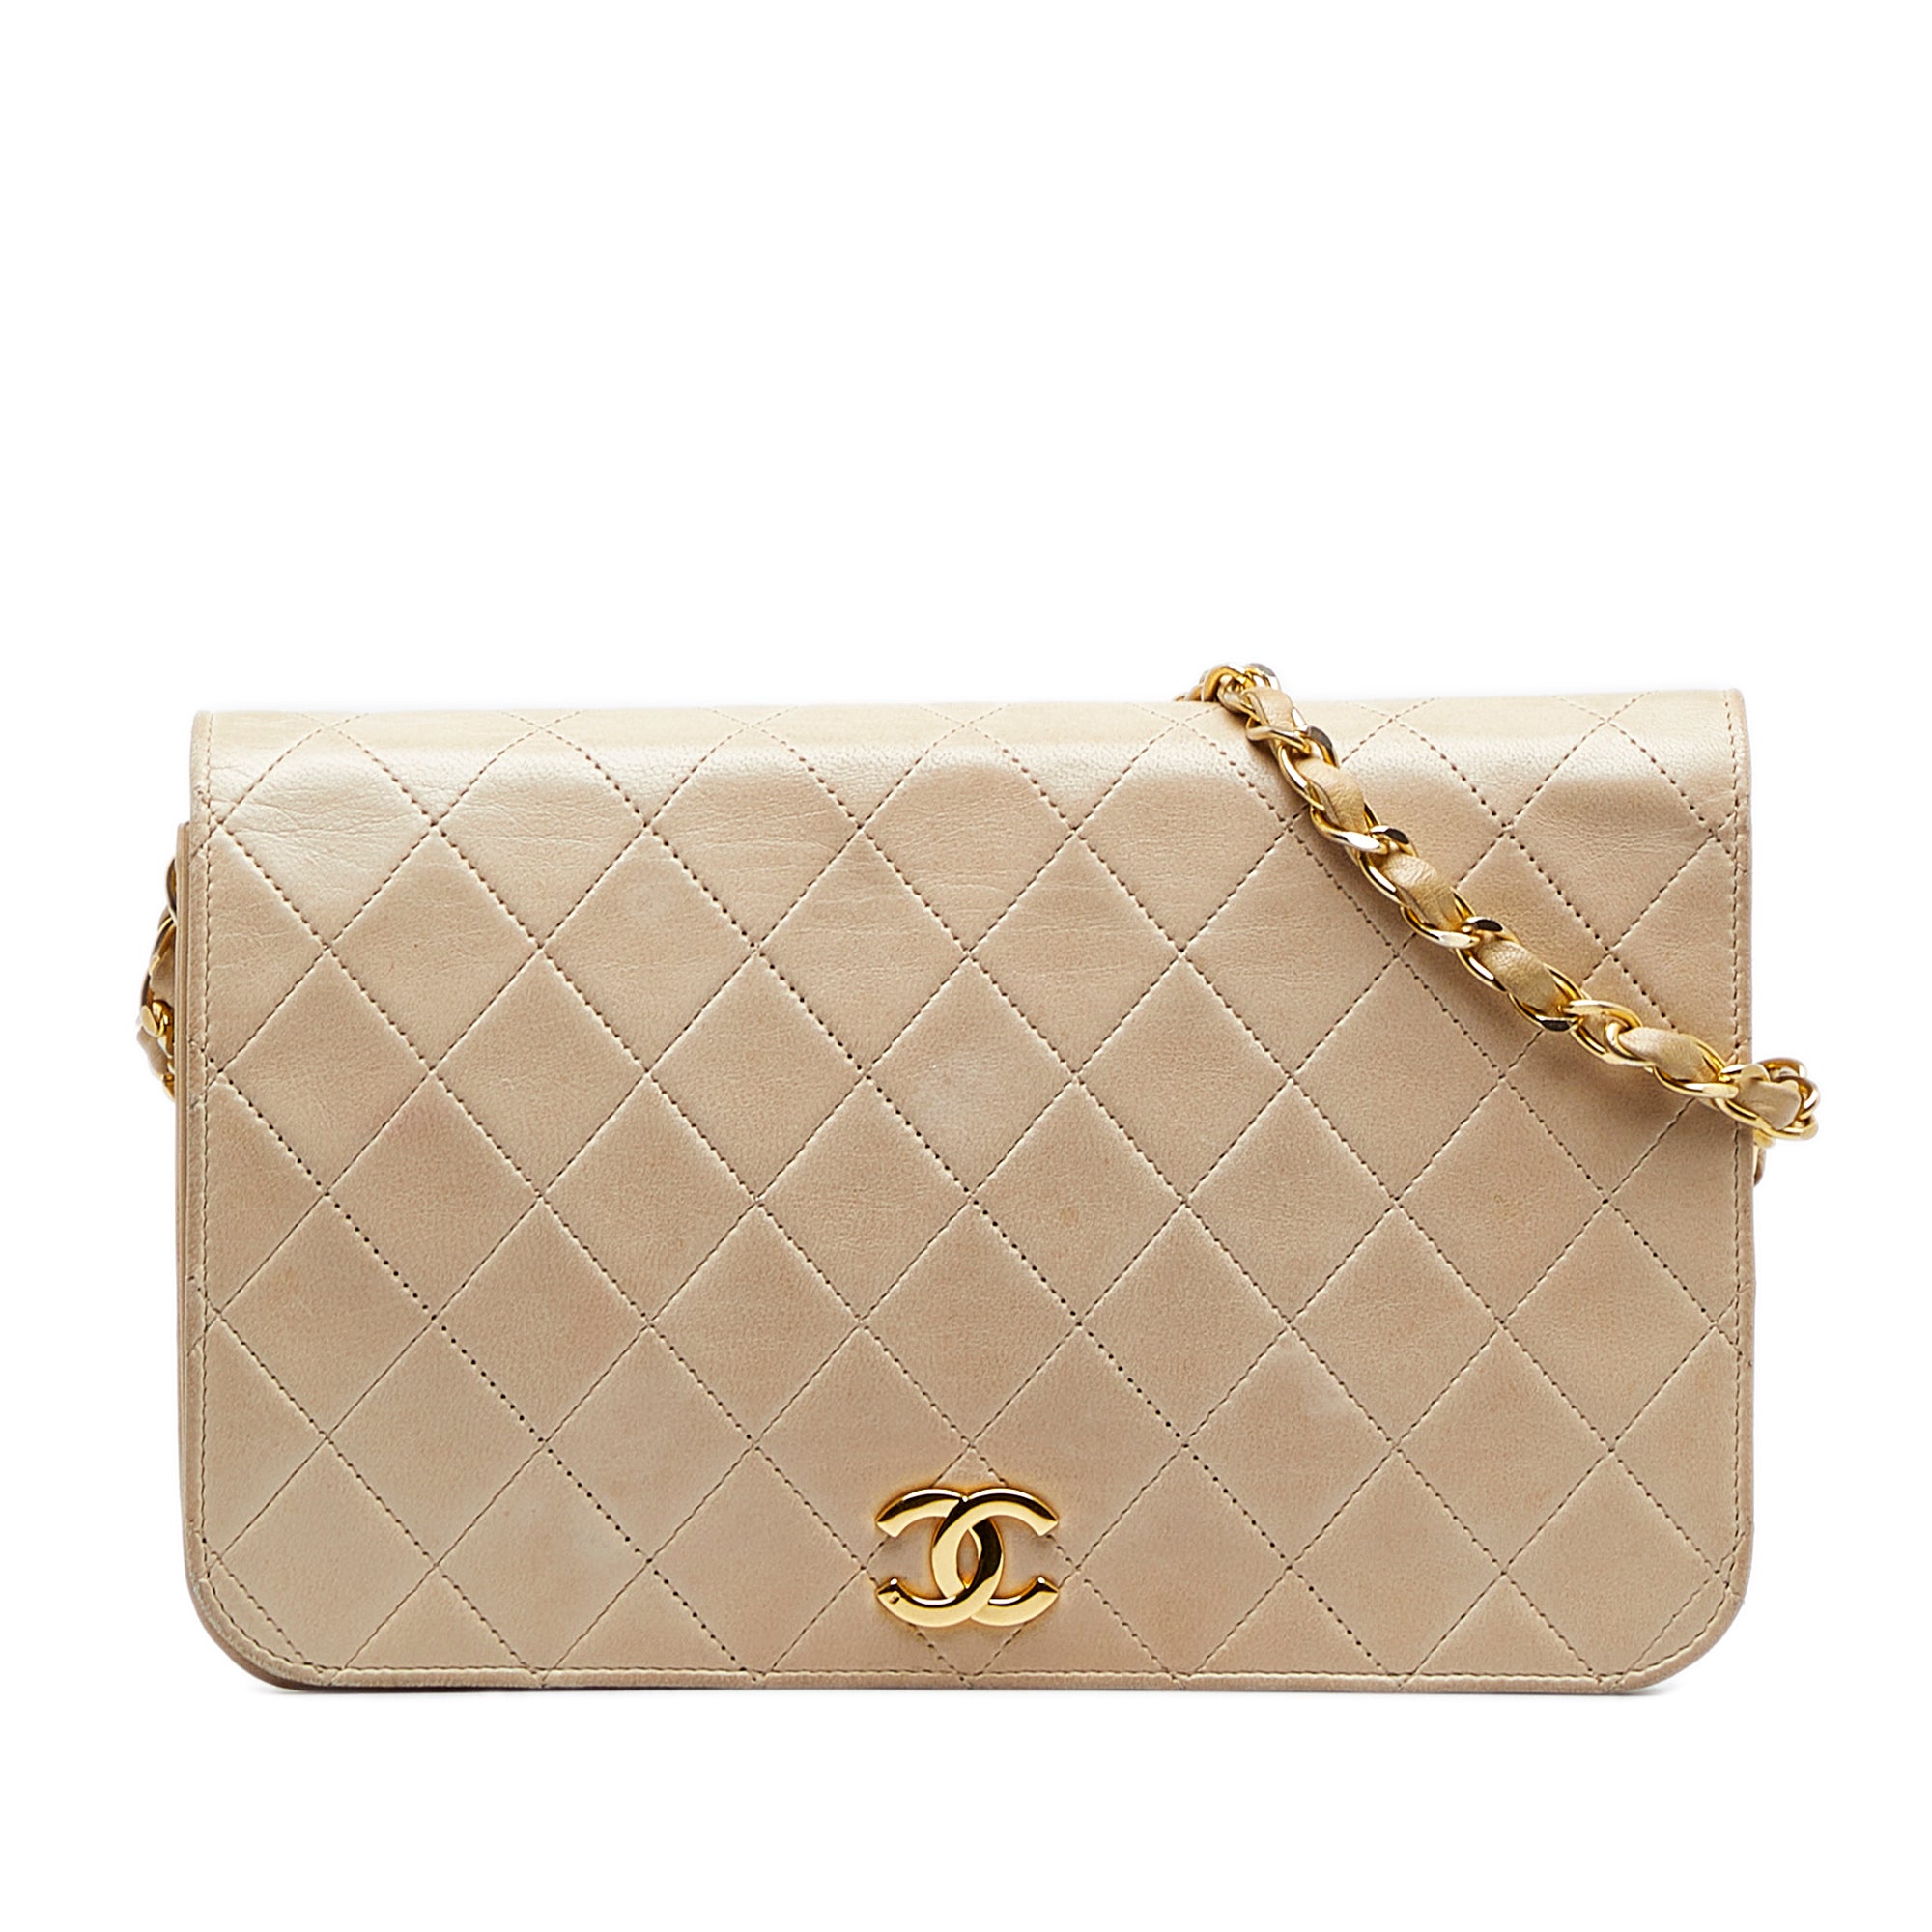 Handbags Chanel Chanel Beige Chevron Shoulder Bag